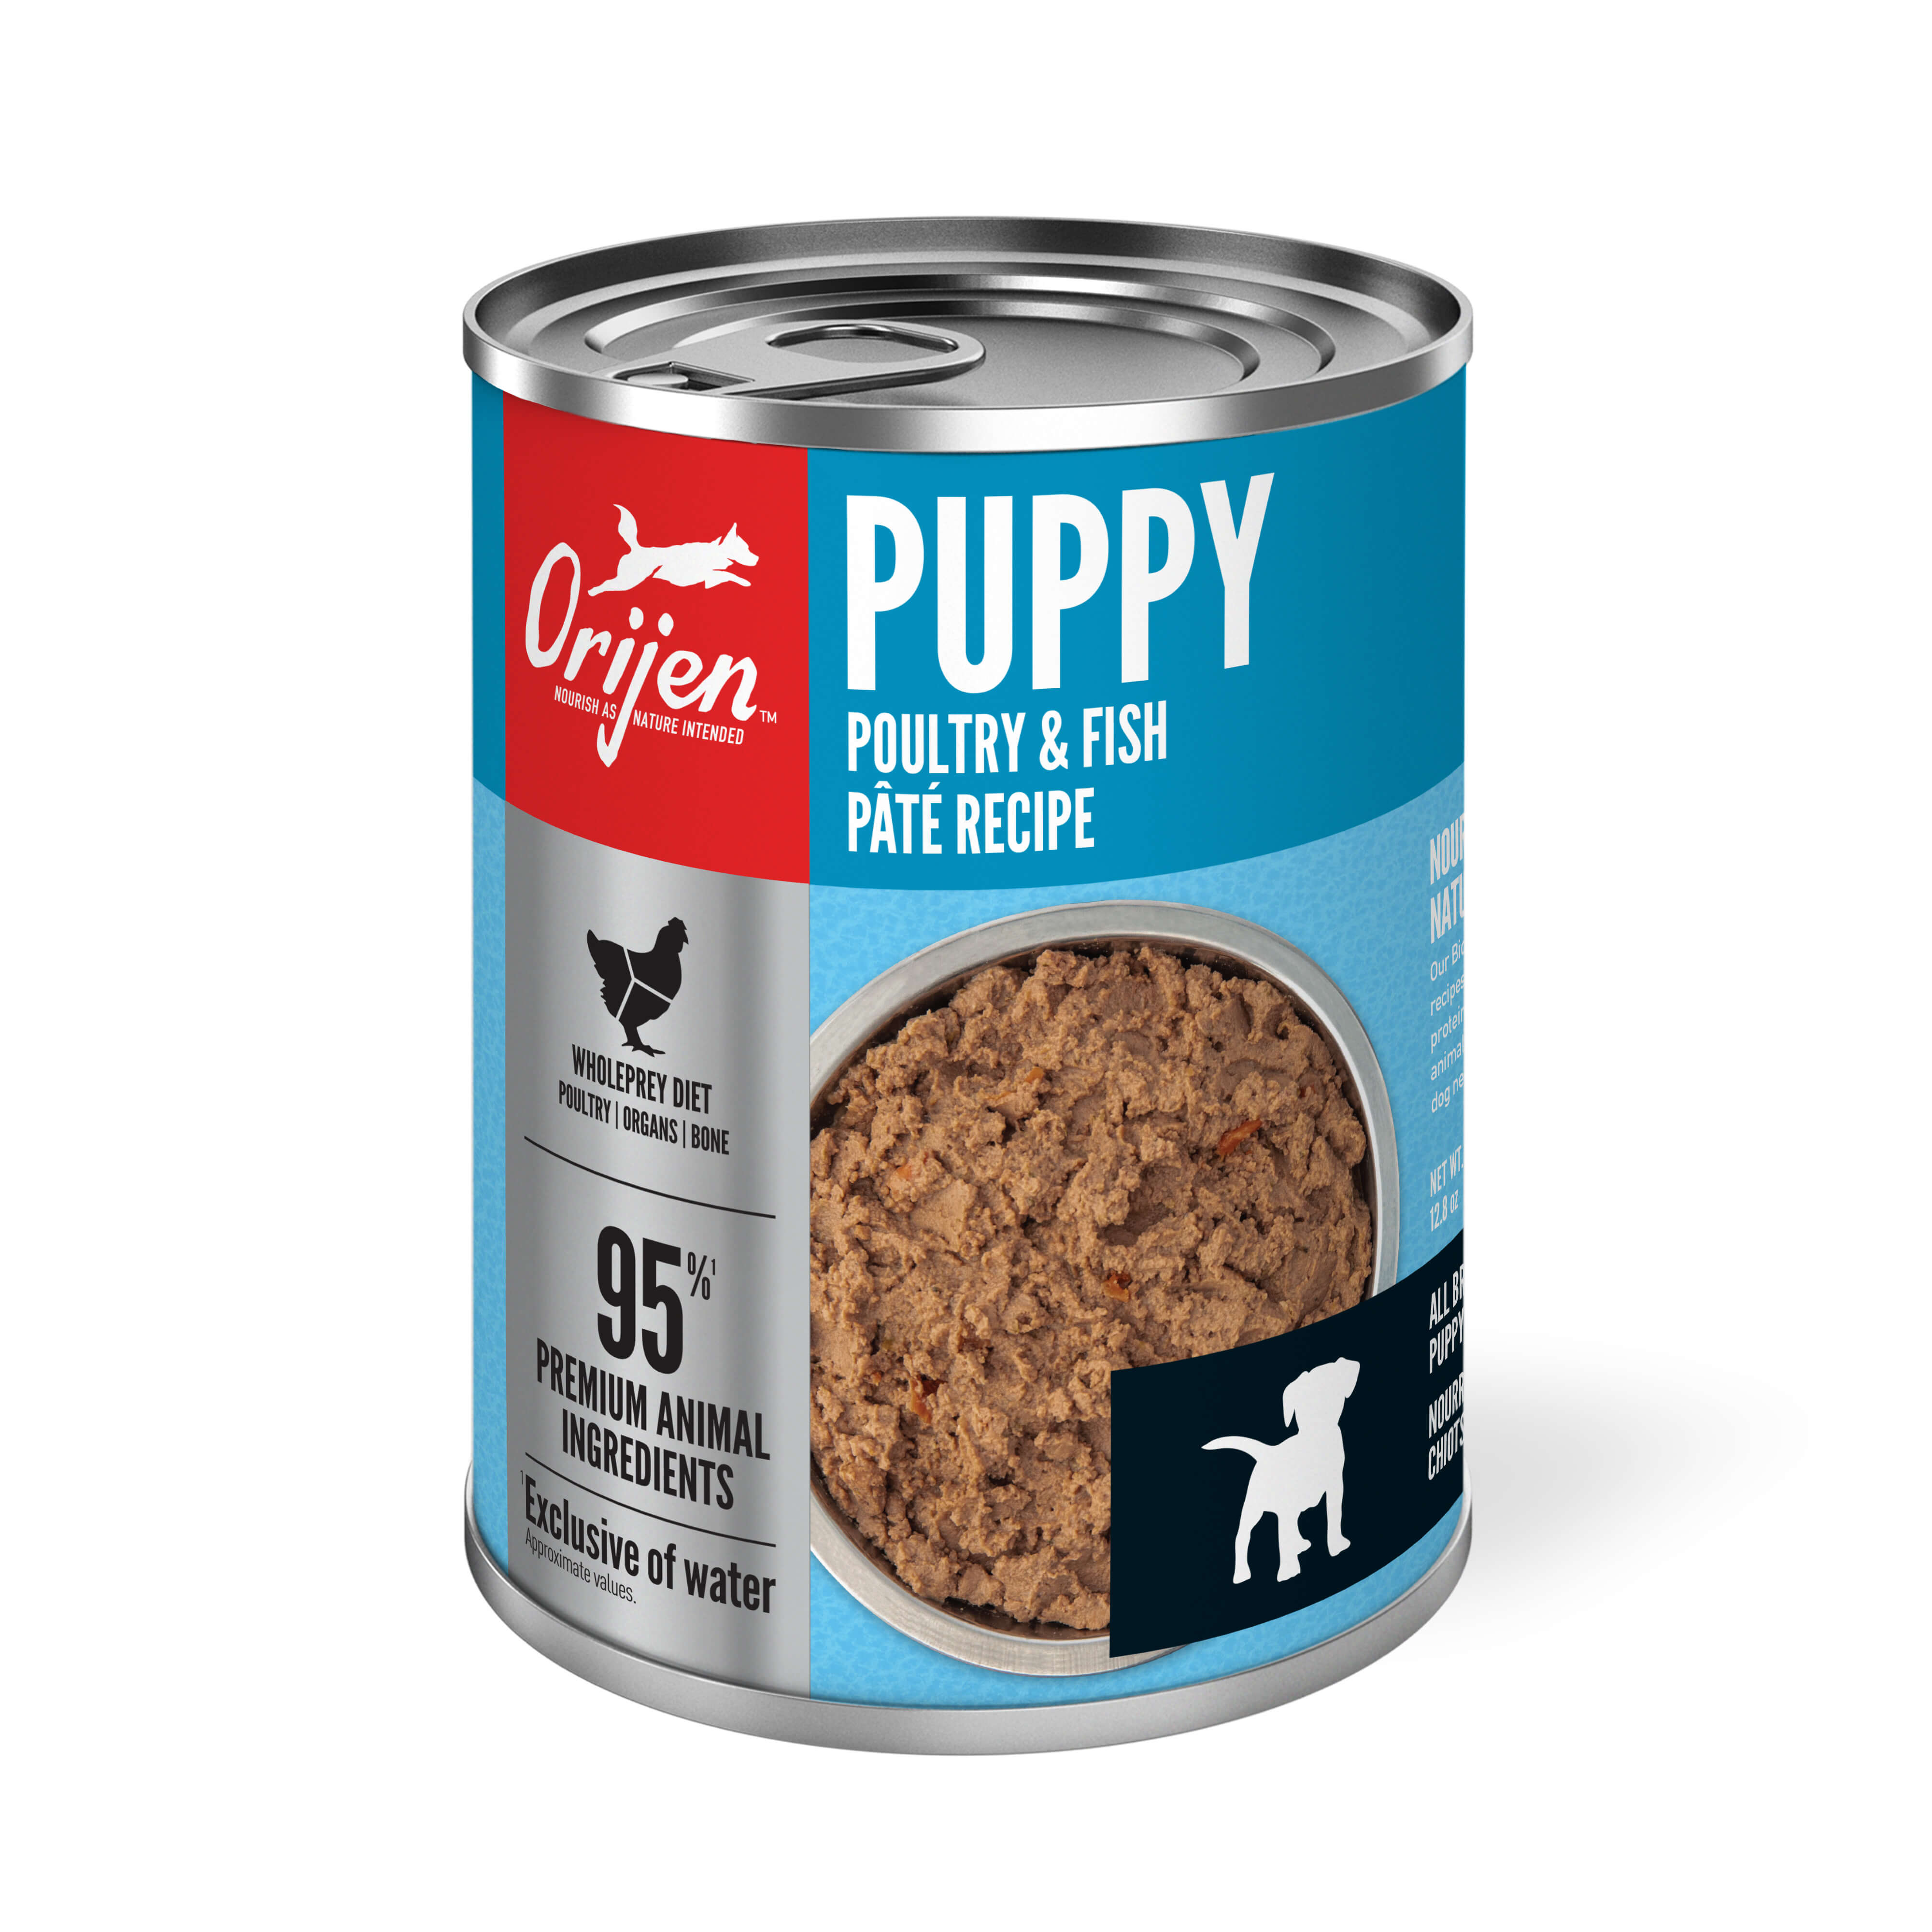 Orijen - Puppy Poultry & Fish Pâté Recipe (Wet Dog Food)